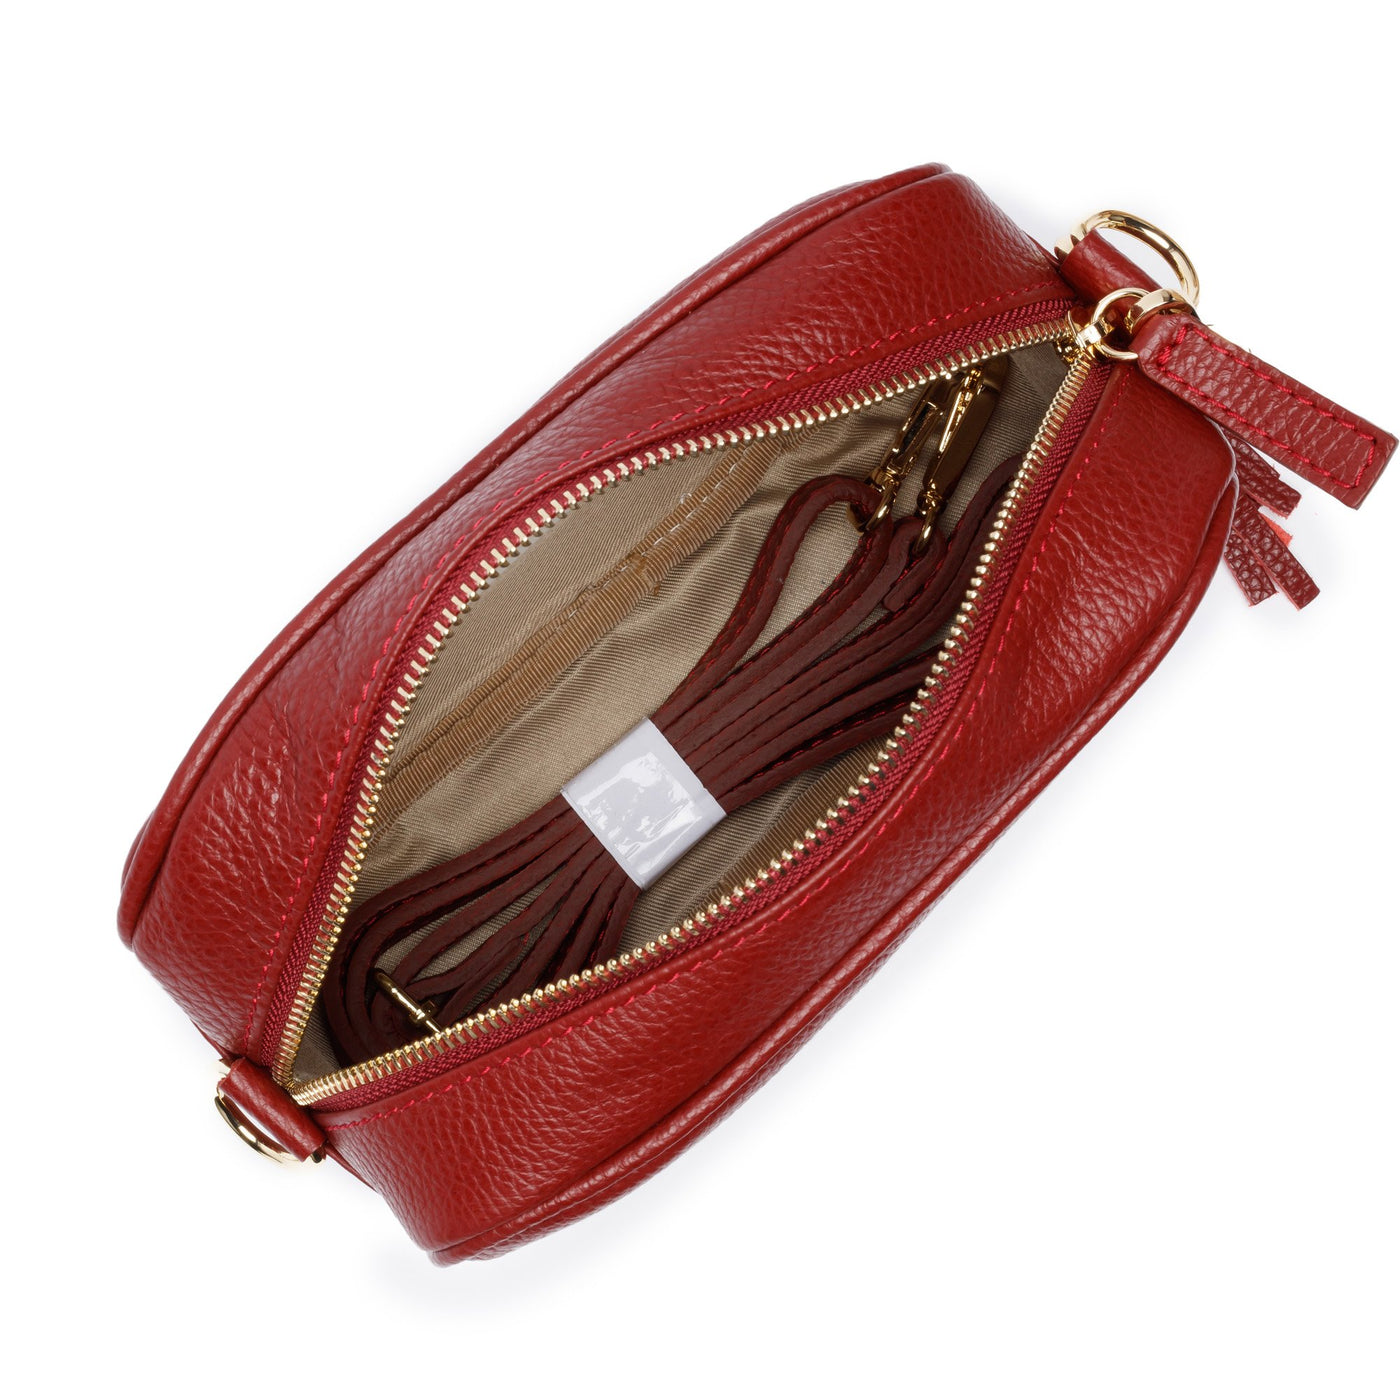 Elie Beaumont Designer Leather Crossbody Bag - Burgundy/Wine (GOLD Fittings)